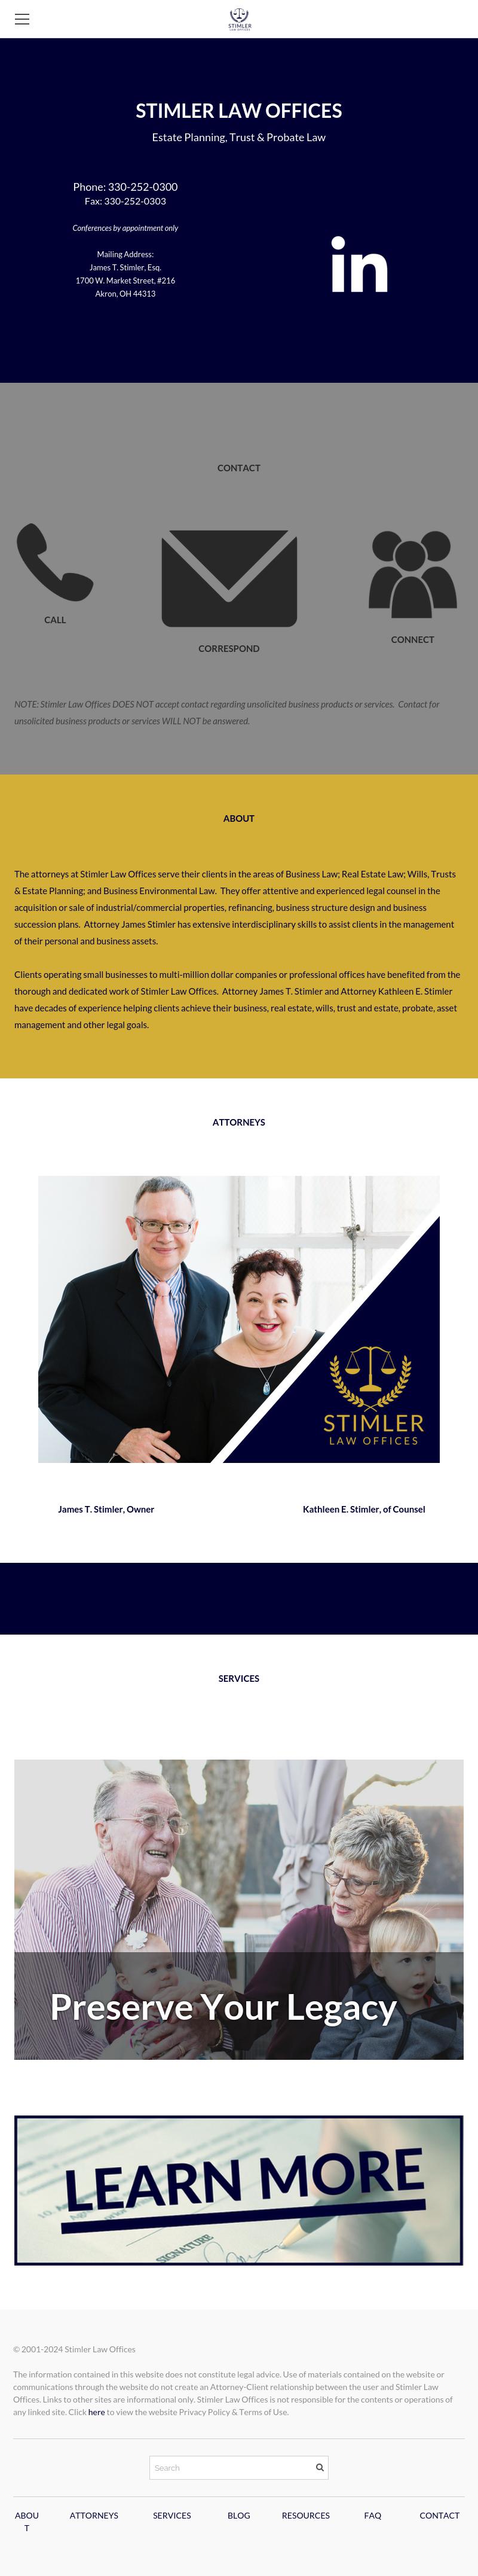 James T Stimler - Cuyahoga Falls OH Lawyers